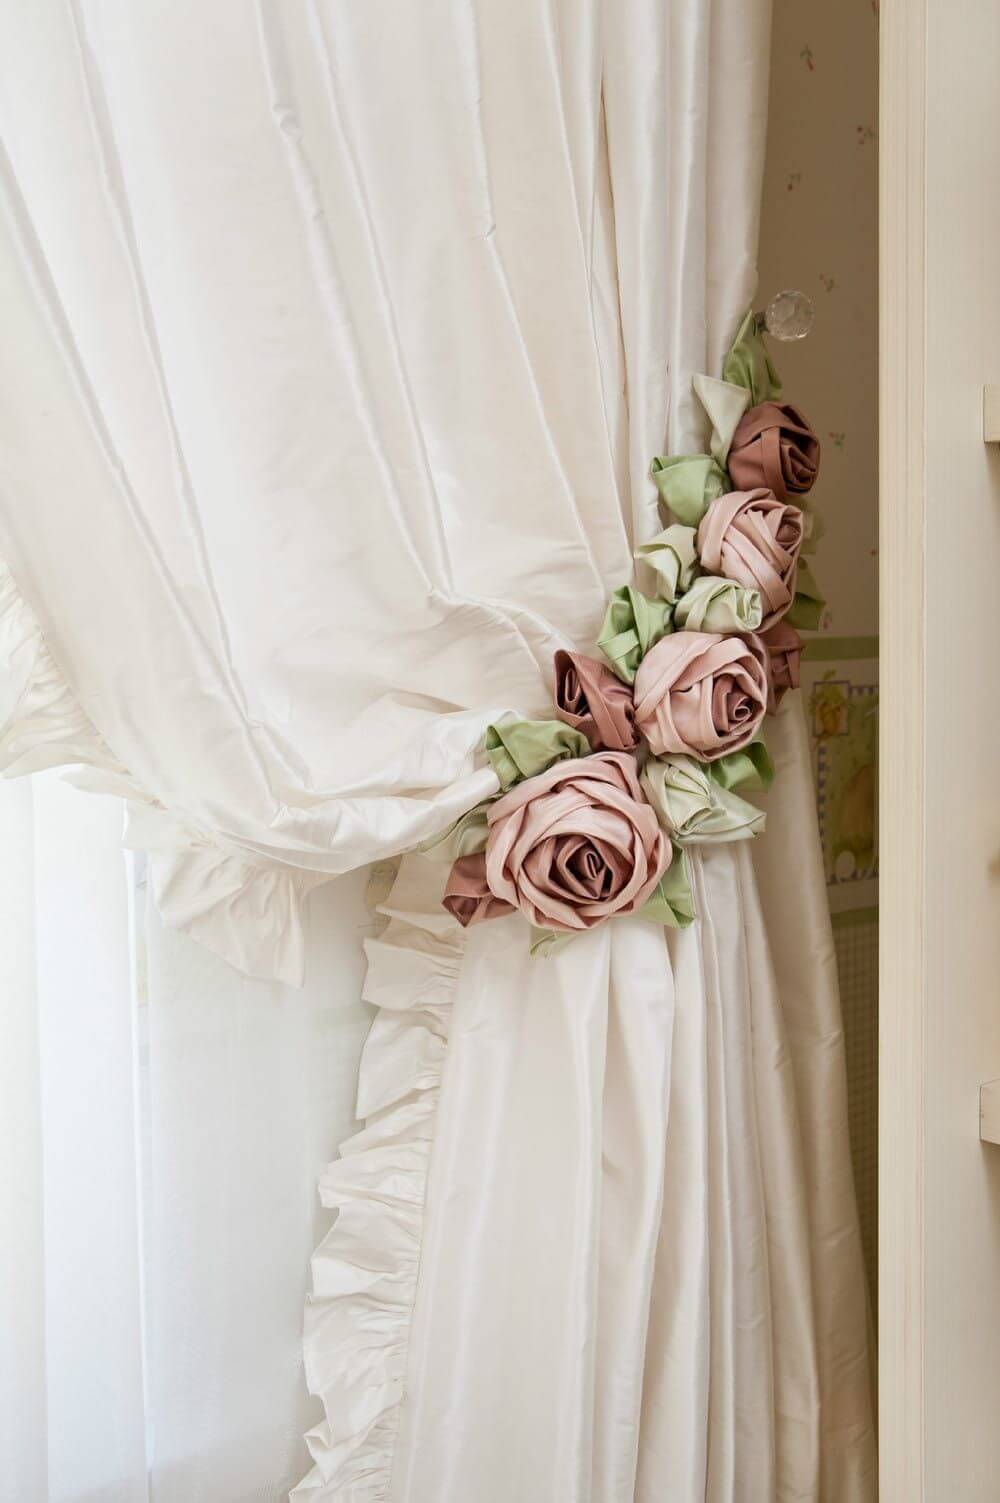 Shabby & ChicTriple Rose Curtain Drapery Tie-Backs PAIR Style #2 